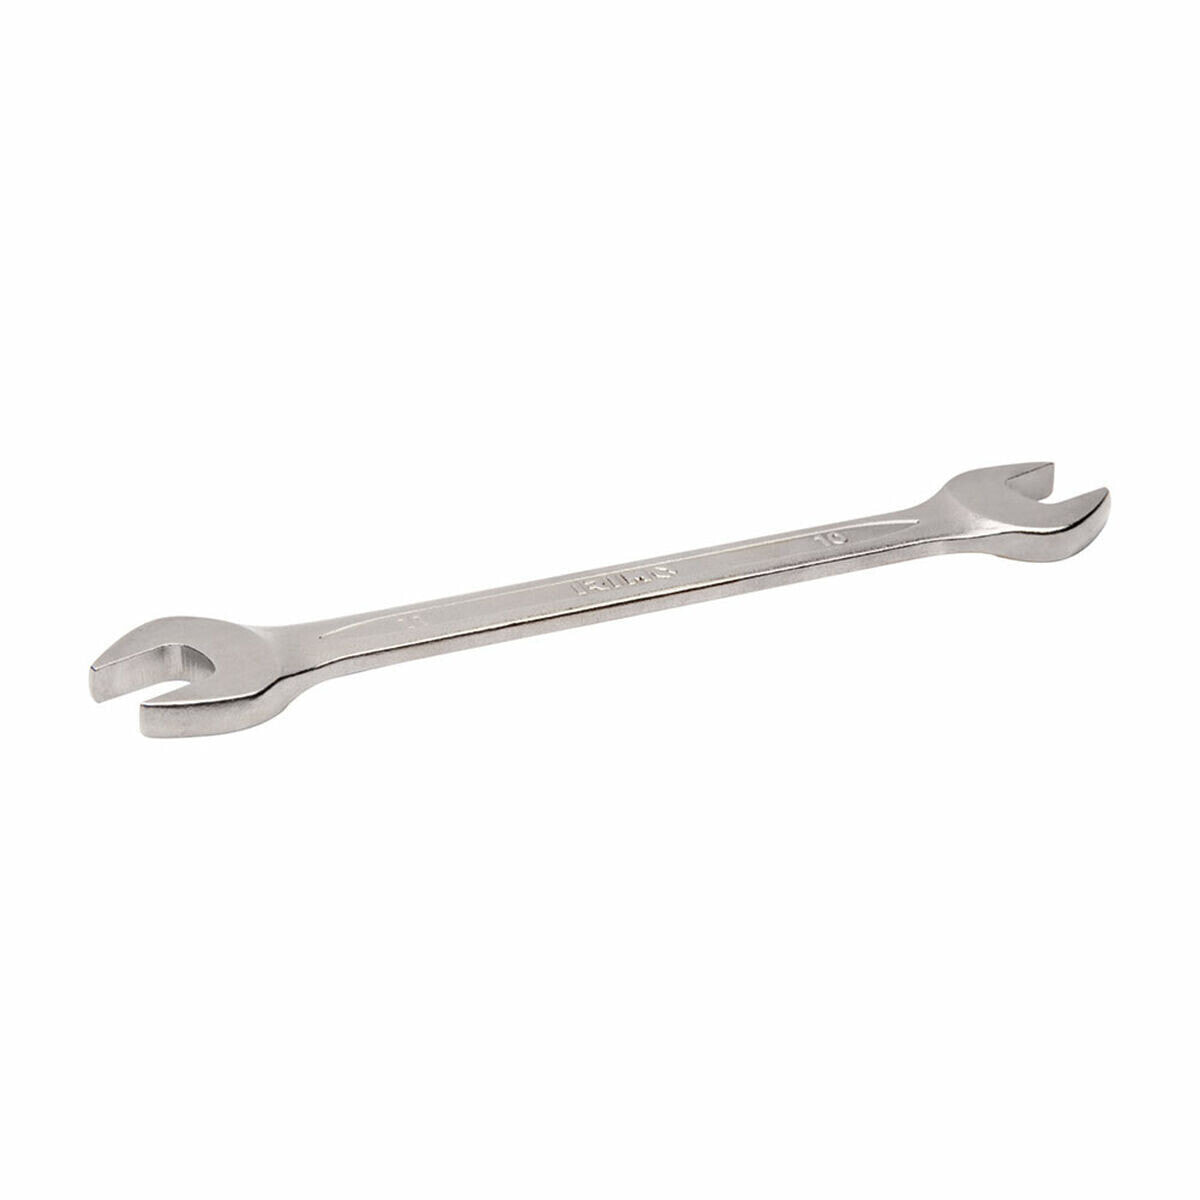 Adjsutable wrench Irimo 14-15 mm